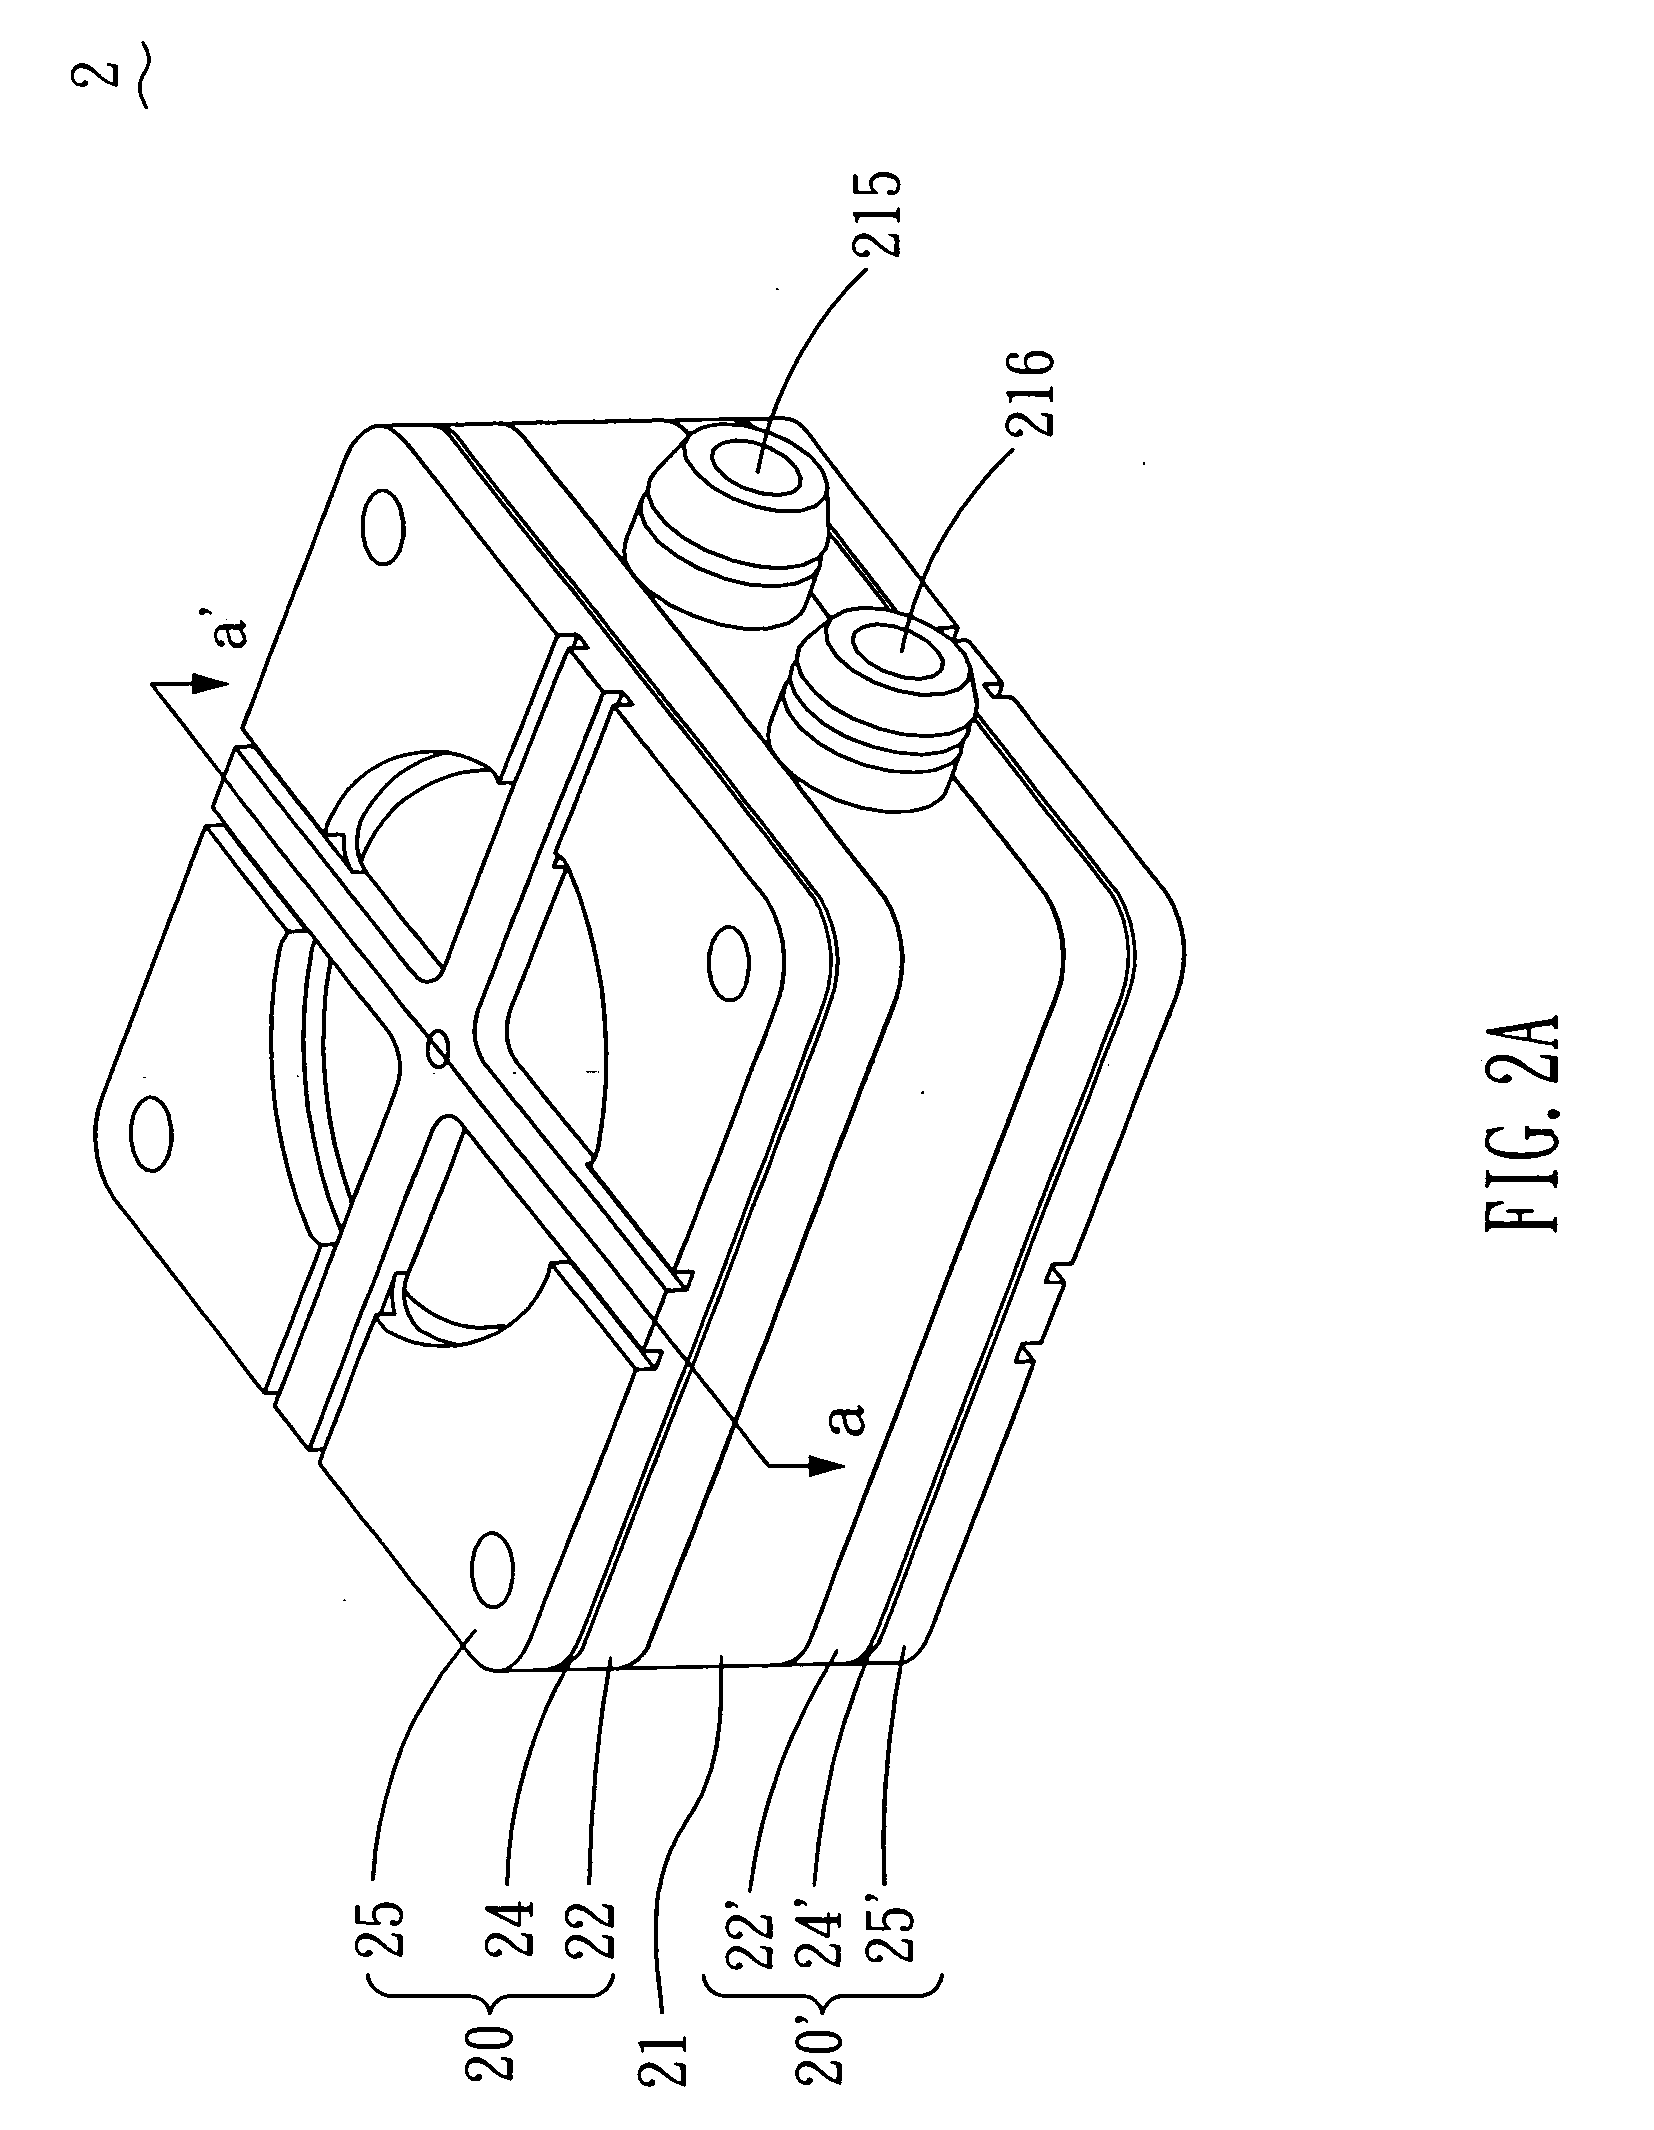 Dual-cavity fluid conveying apparatus